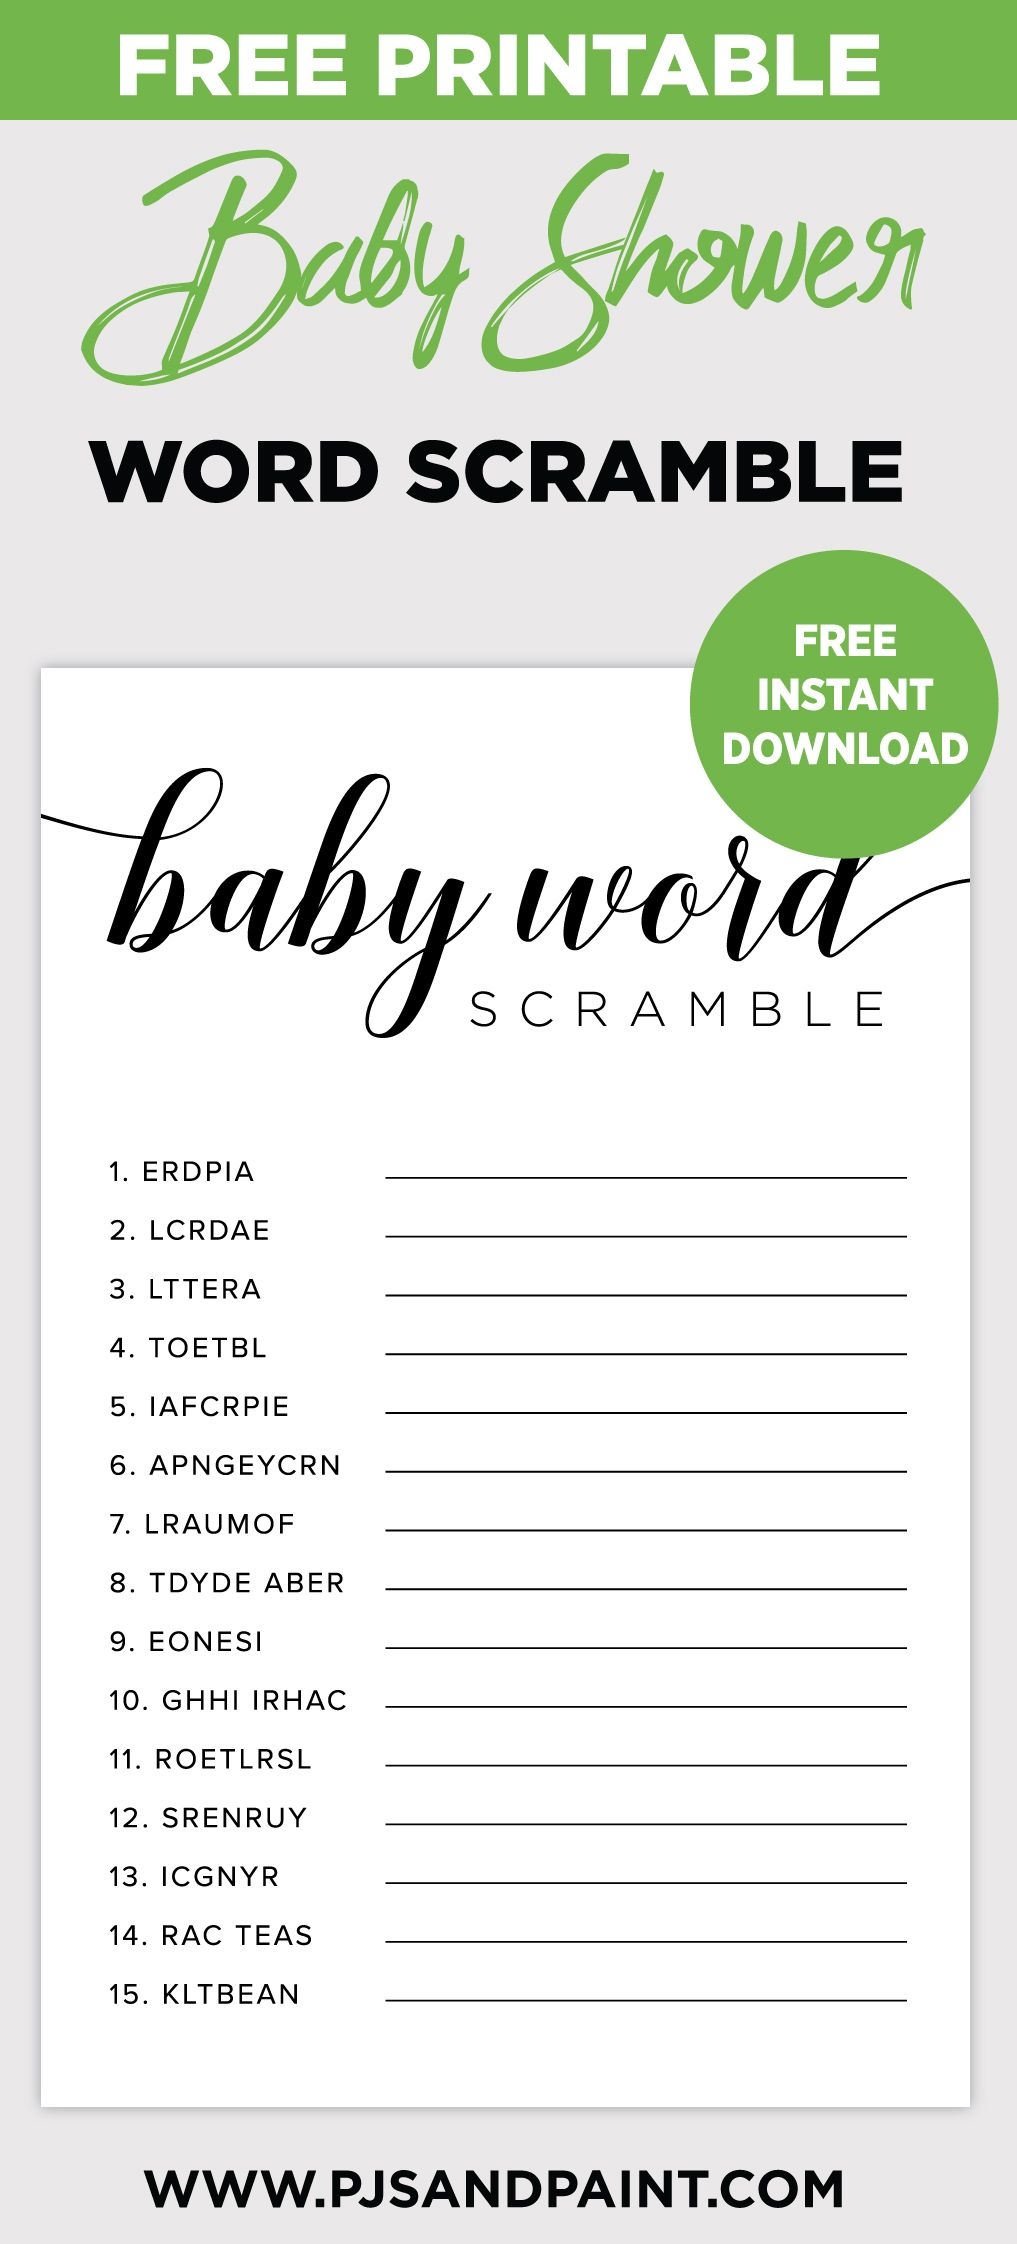 Free Printable Baby Shower Word Scramble Free Printable Baby Shower Games Baby Shower Wording Free Baby Shower Games - Free Printable Baby Shower Word Scramble